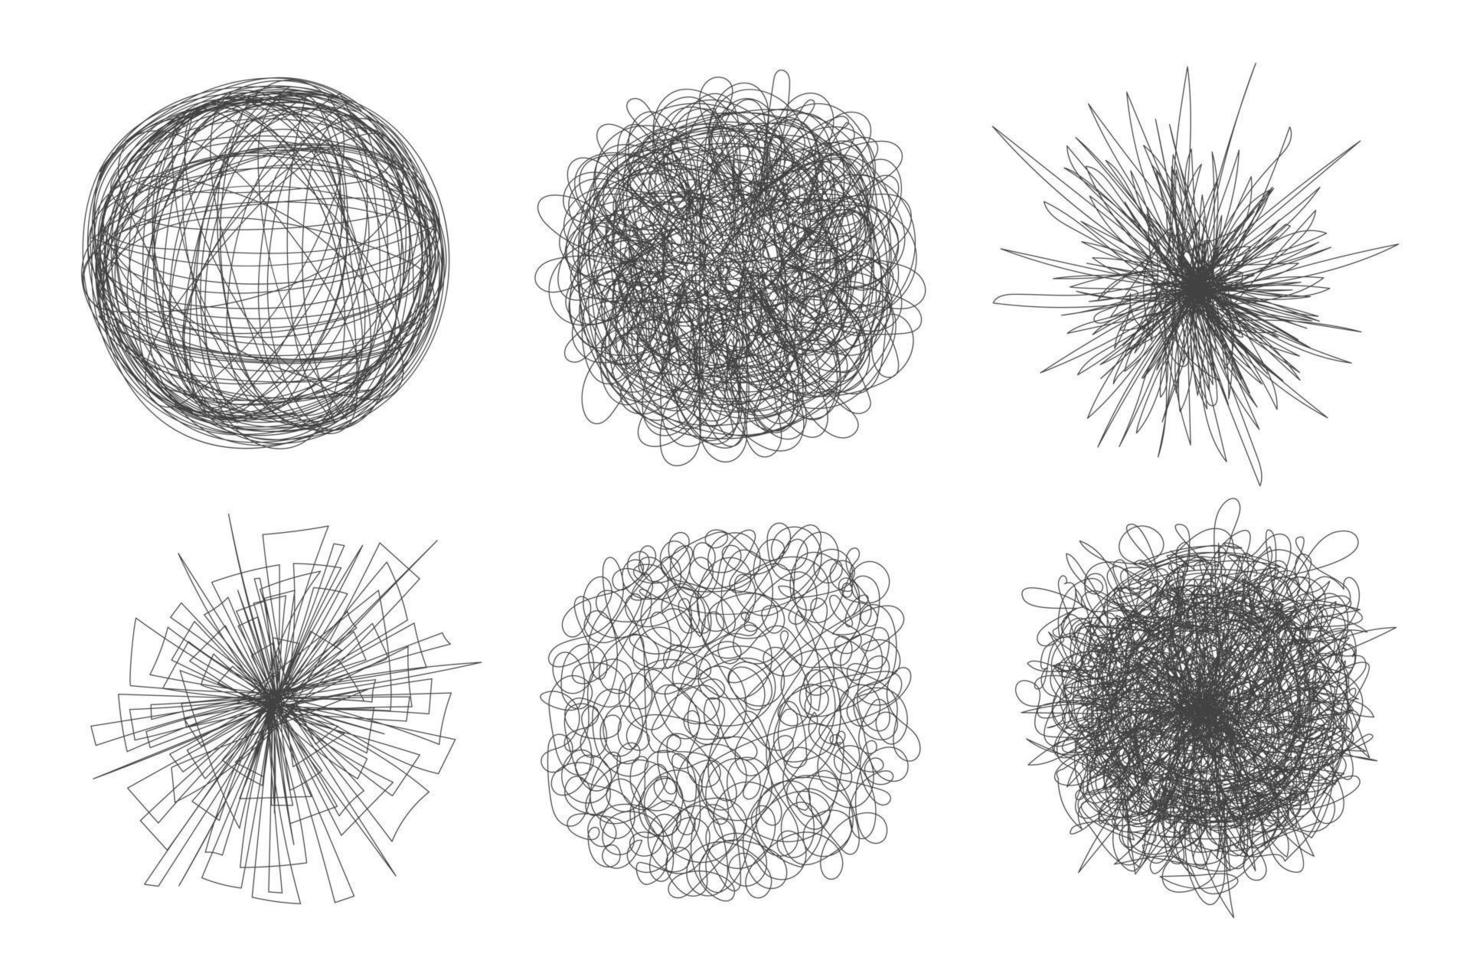 Tangled chaos abstract hand drawn messy scribble ball vector illustration set.